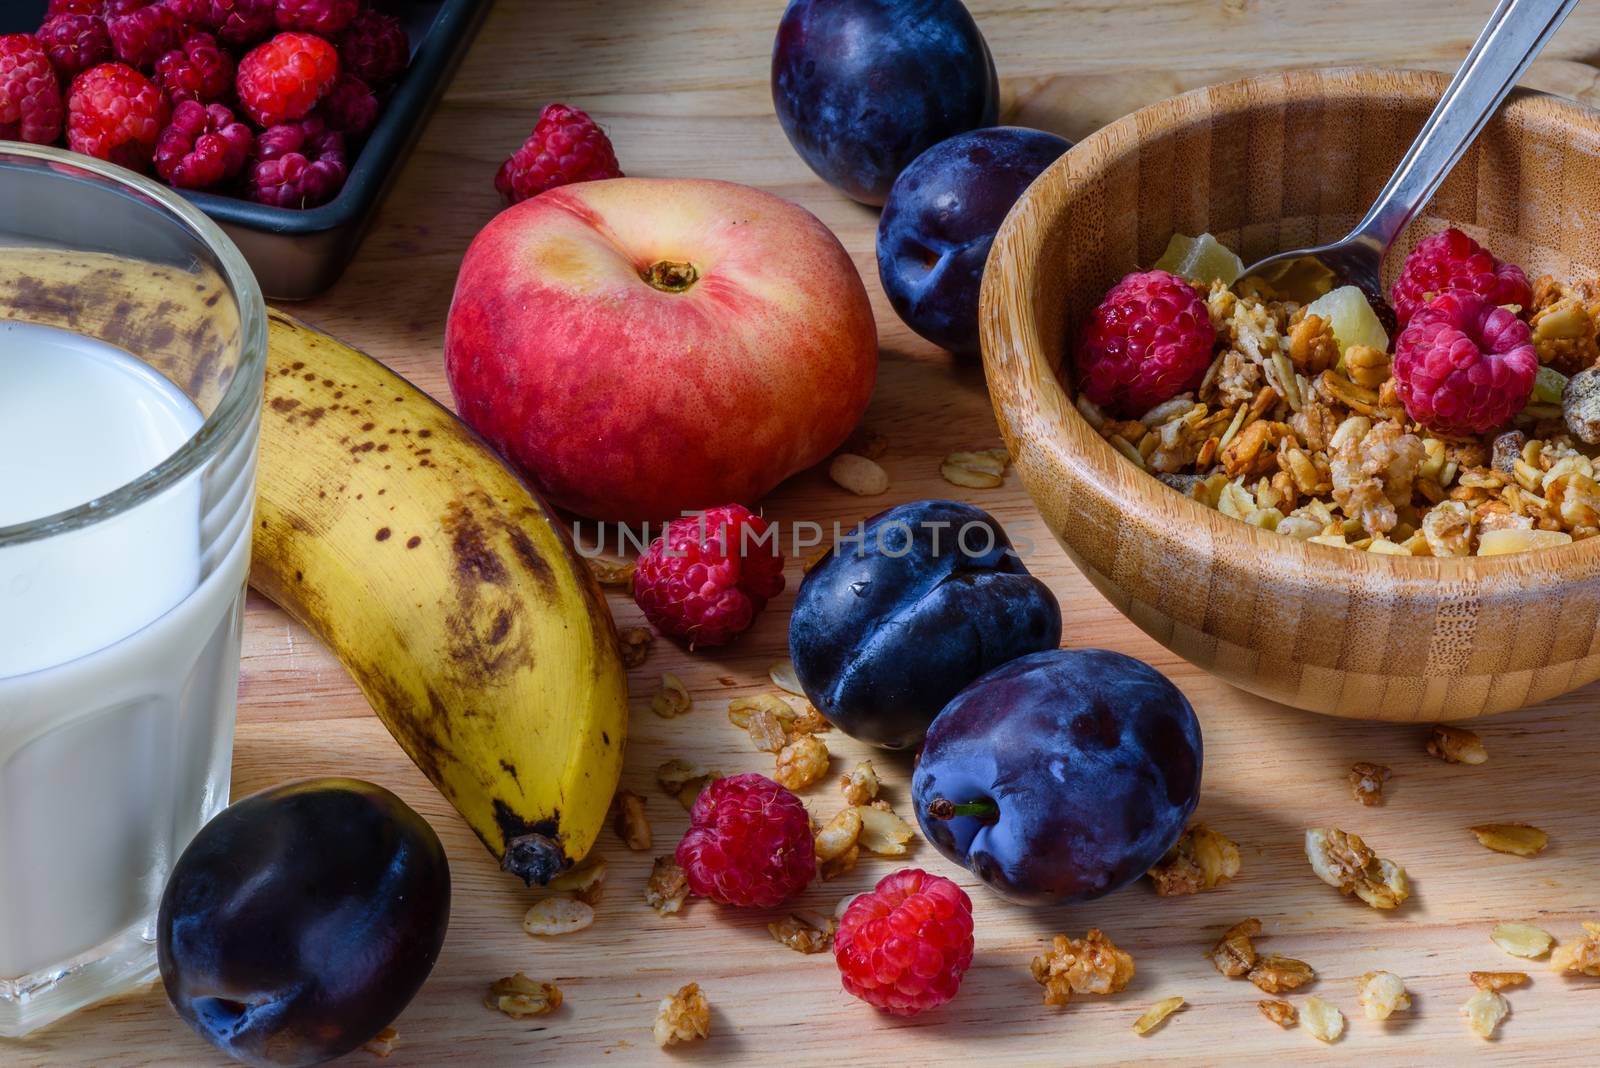 Superbreakfast bowl with muesli, berries, fruits and milk by Seva_blsv